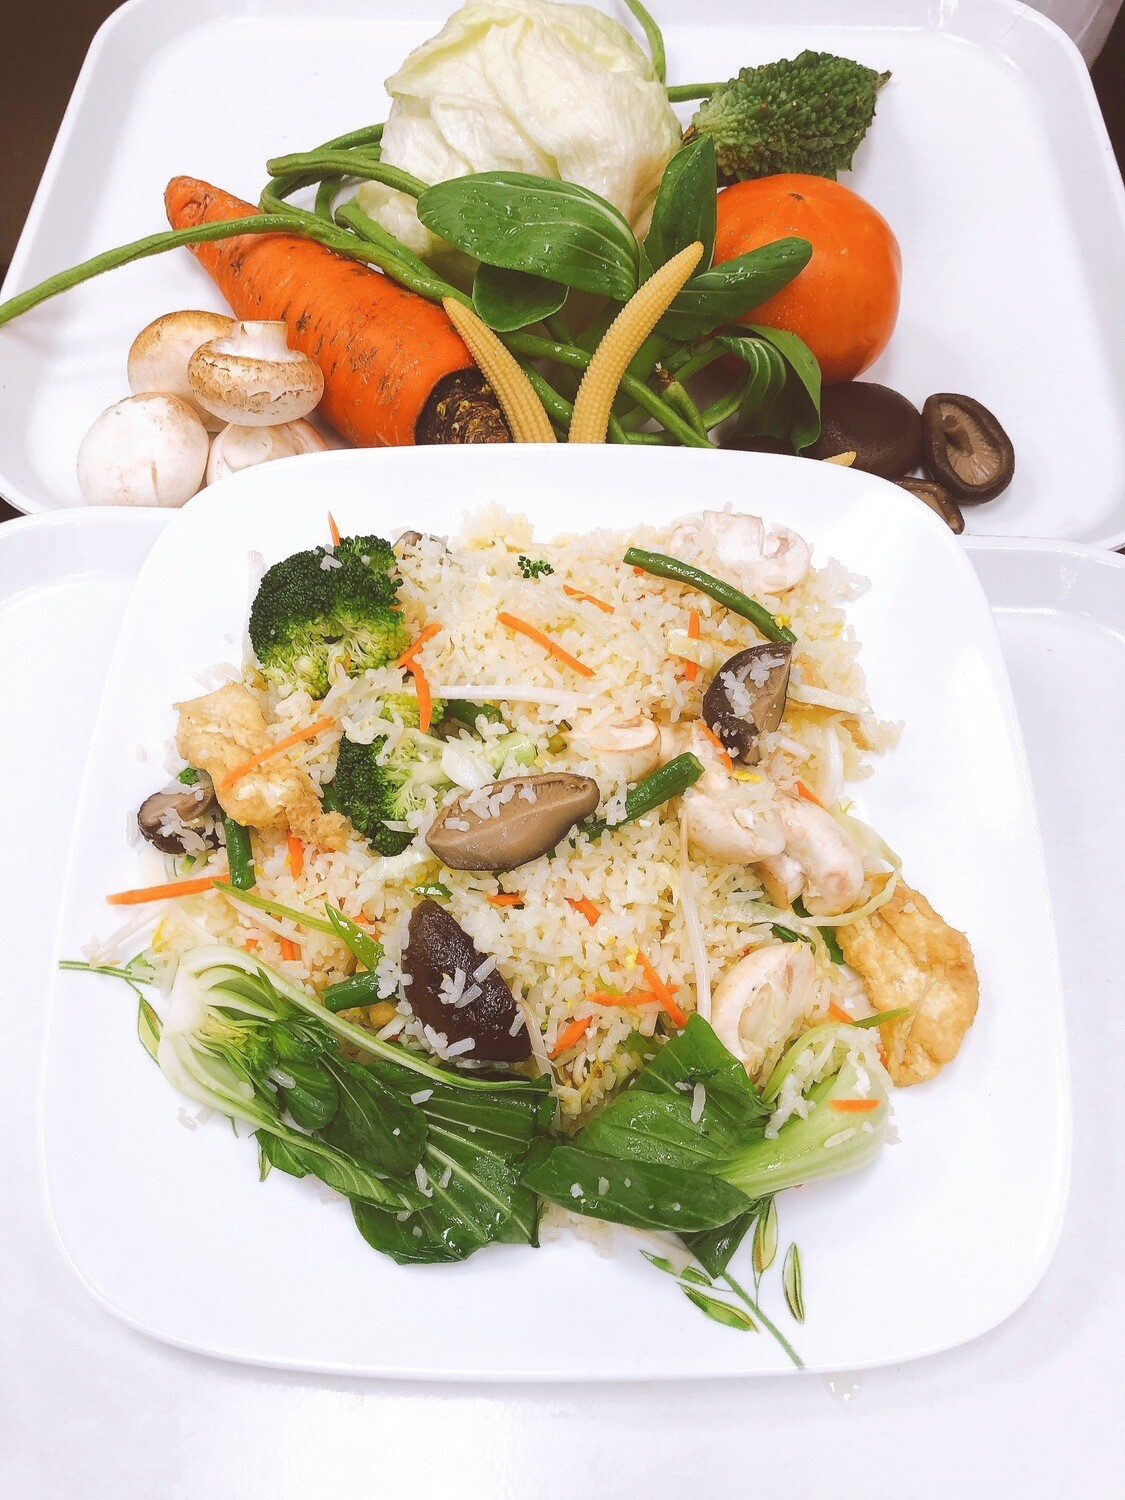 606- Vegetables, Egg, Mushrooms, and Tofu Fried Rice